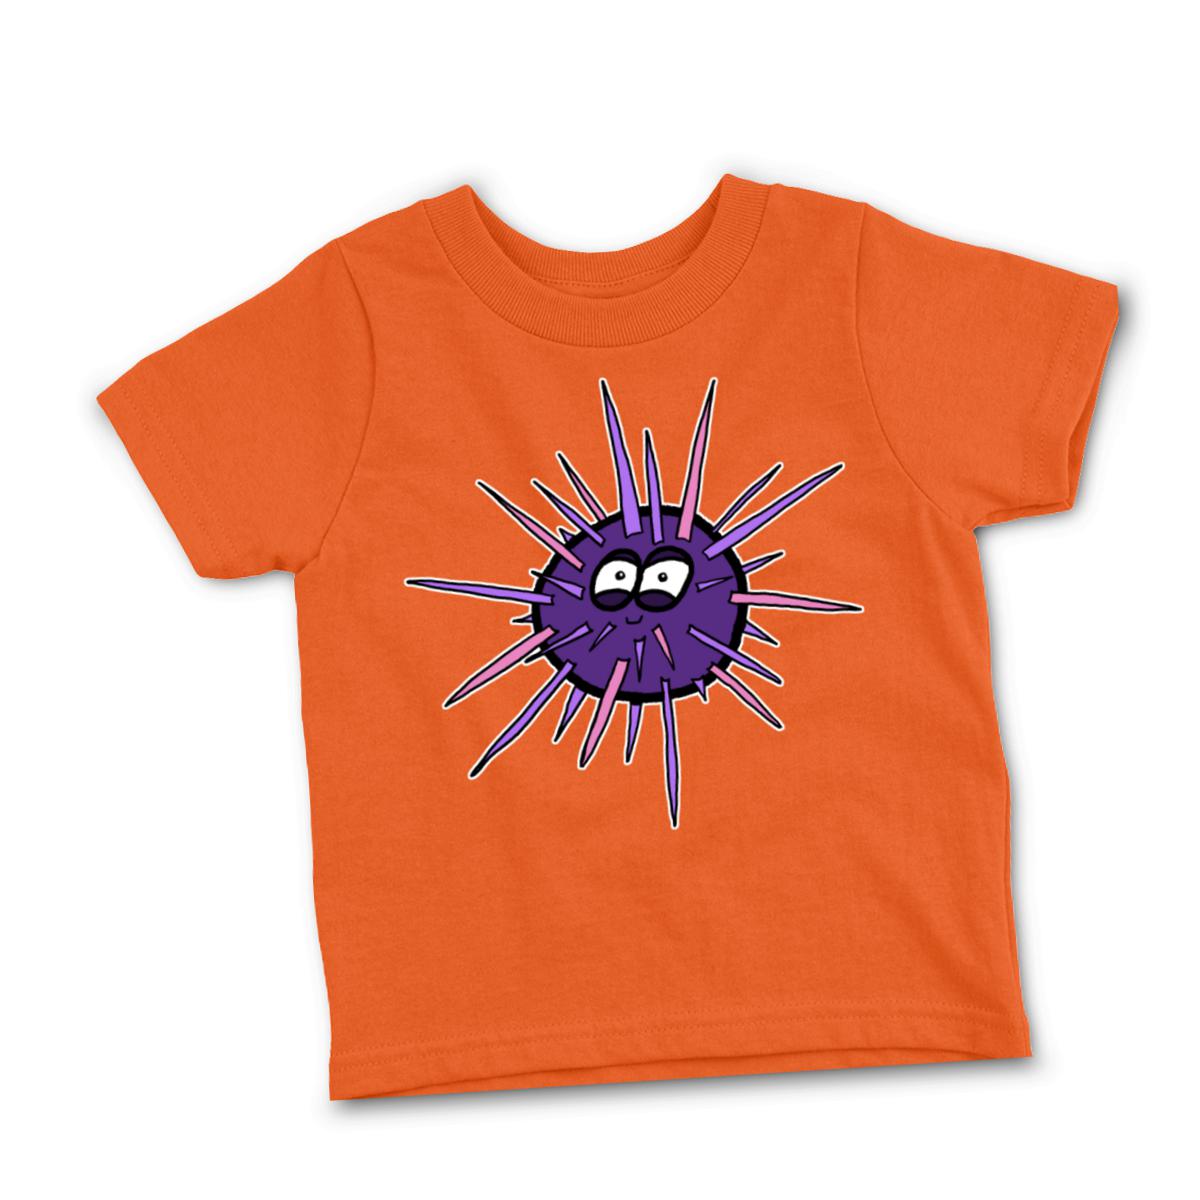 Sea Urchin Toddler Tee 56T orange